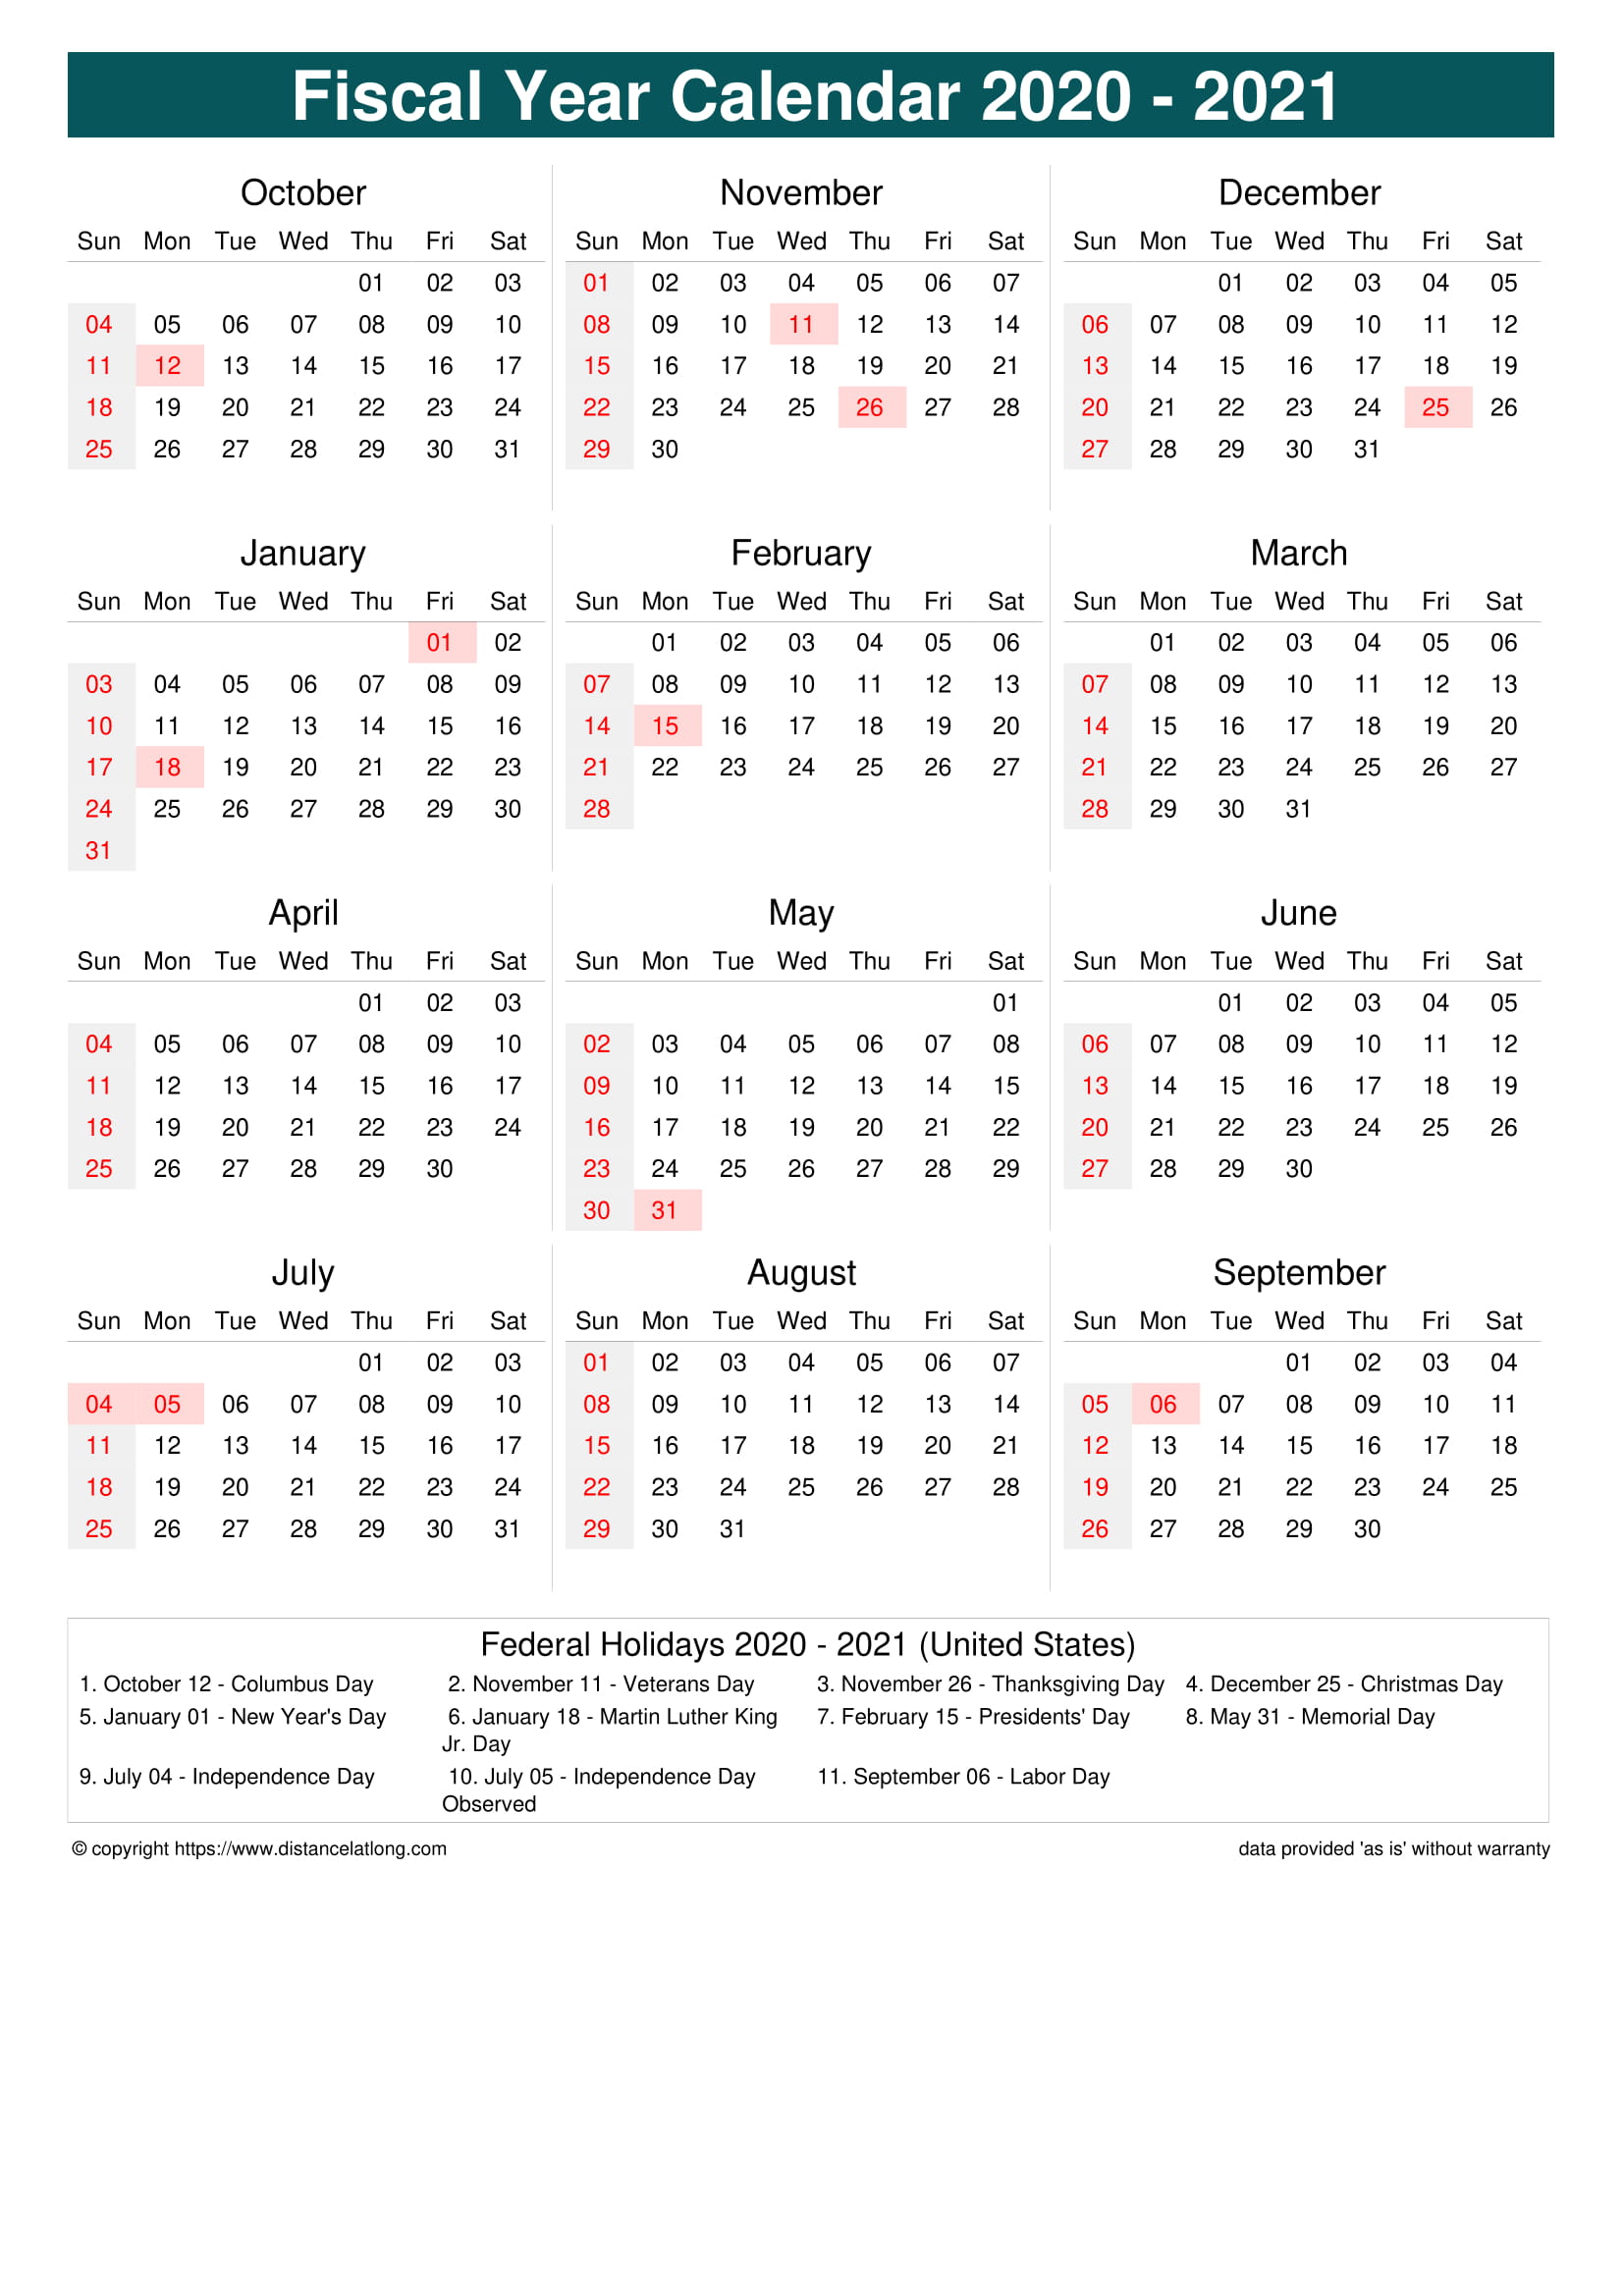 Fiscal Year 2020 2021 Calendar Templates Free Printable Fiscal Calendar Templates Distancelatlong Com